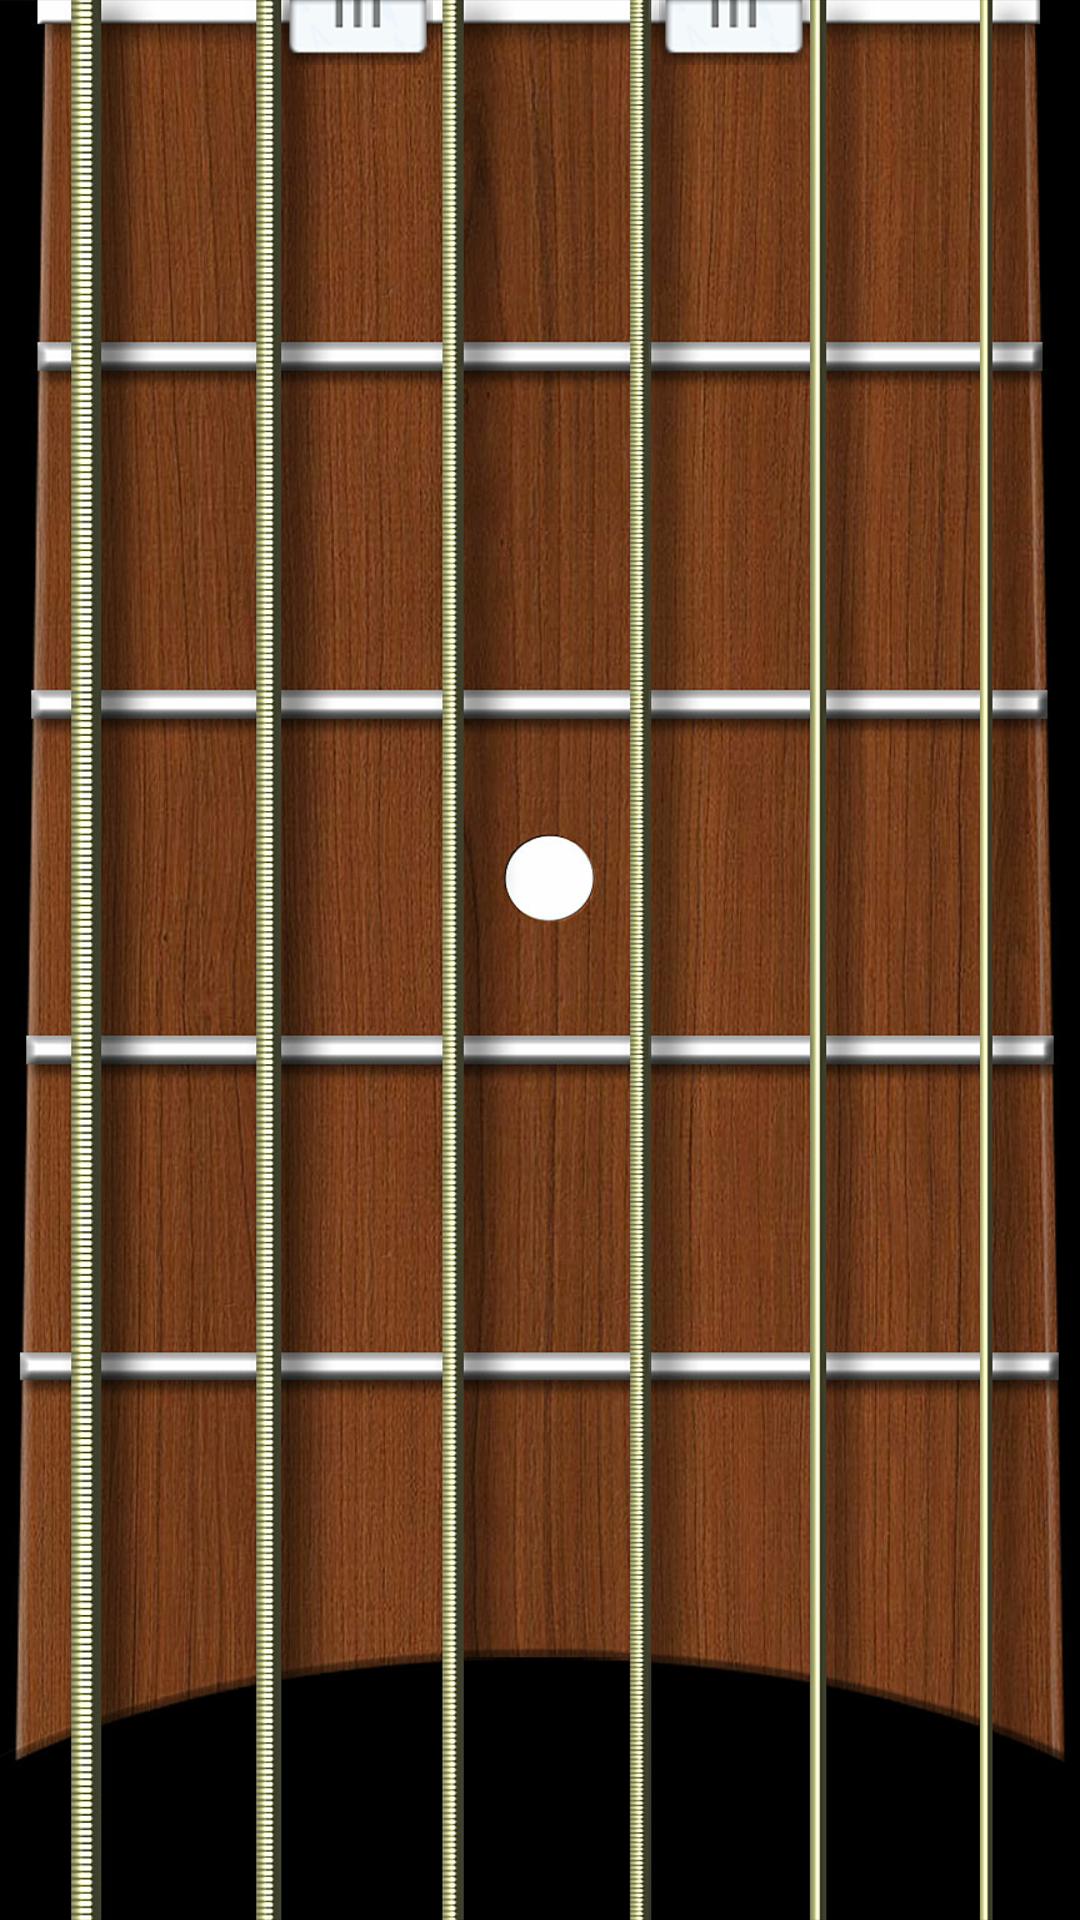 My Guitar Solo & Chords 2.4 Screenshot 1